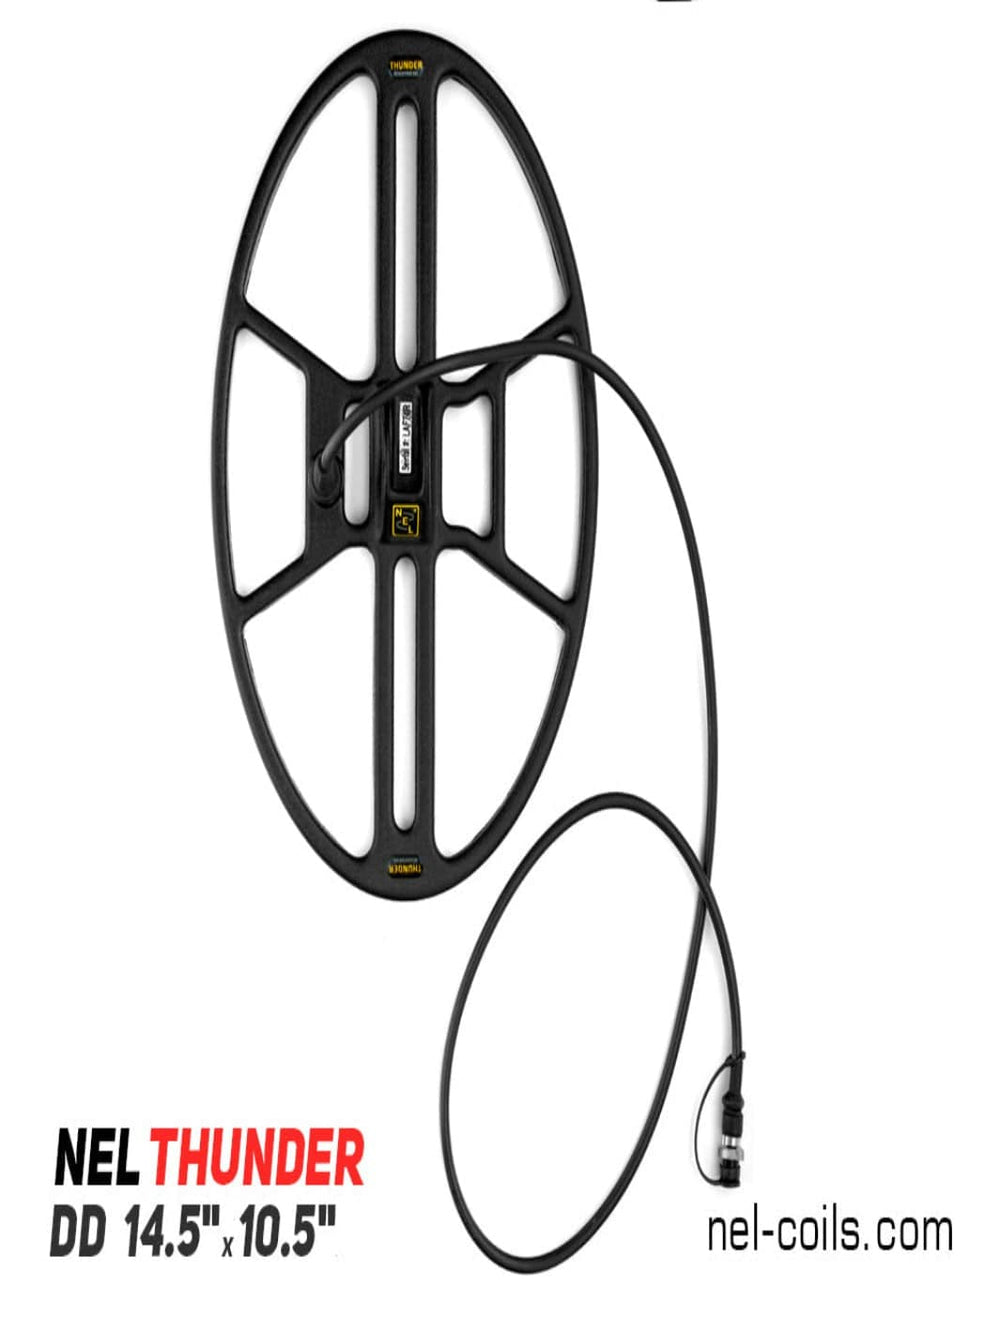 Nel Thunder For Garrett Ace Apex 14.5x10.5 inch Double D - Treasure Coast Metal Detectors